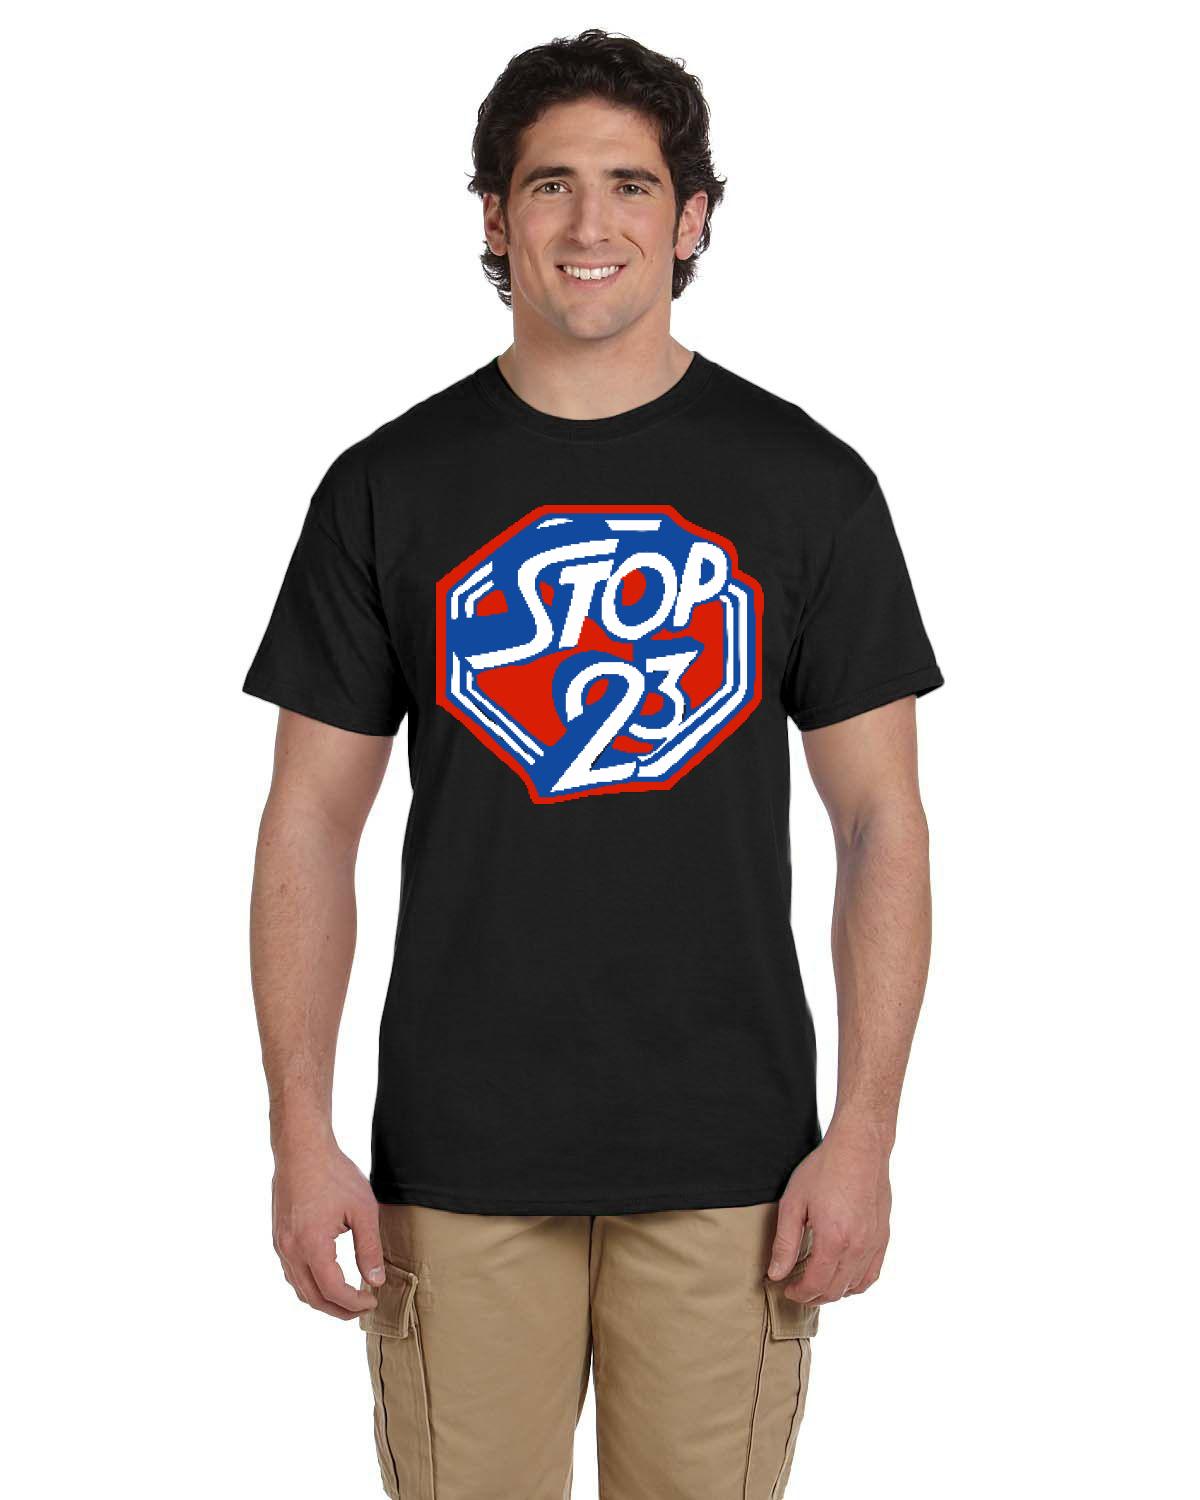 Stop 23 Men's T-Shirt